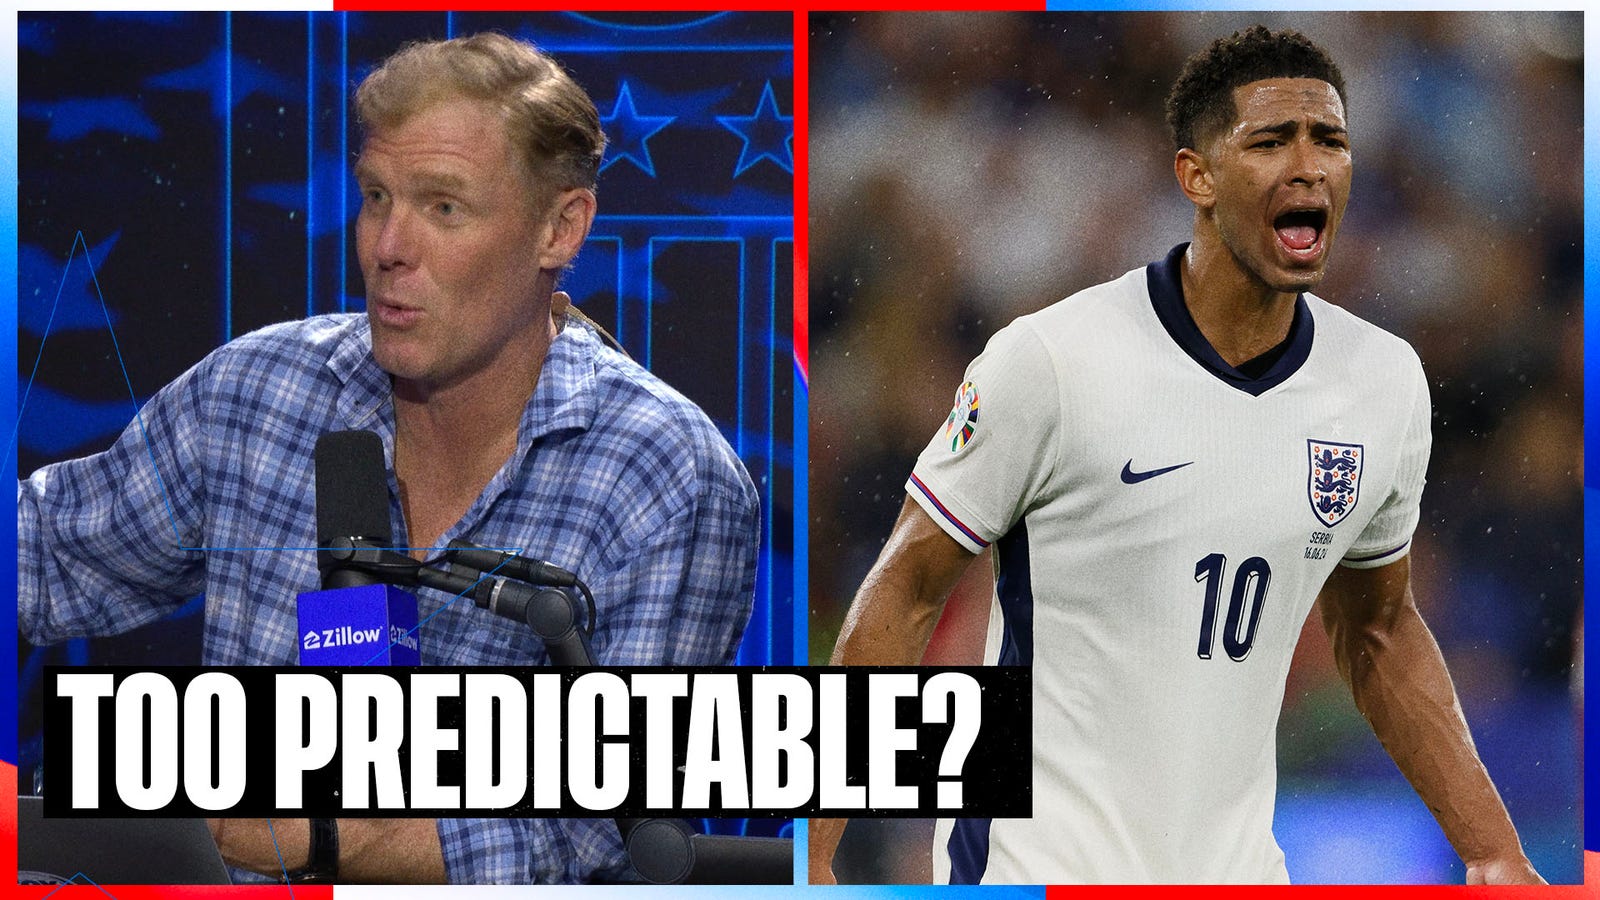 Has England become predictable under Gareth Southgate?